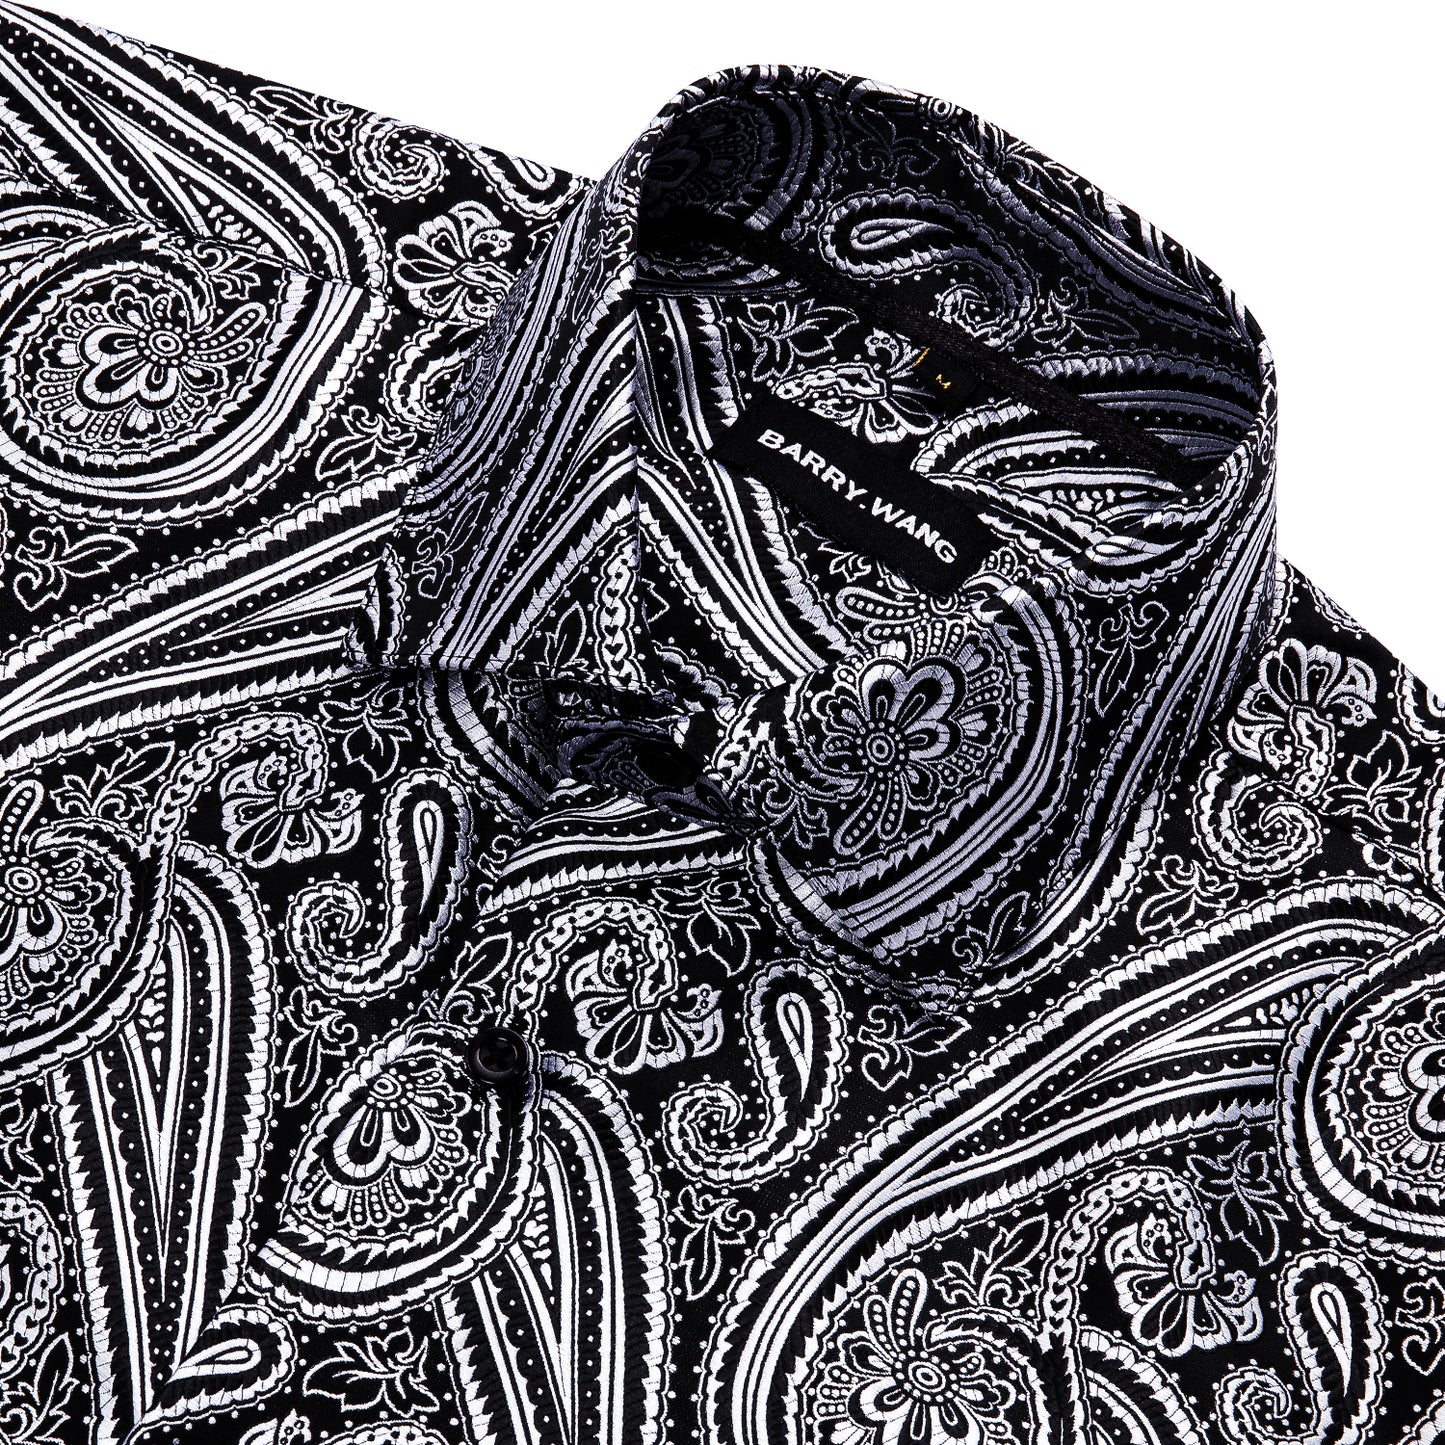 Novelty Silky Shirt - Charcoal Swirl